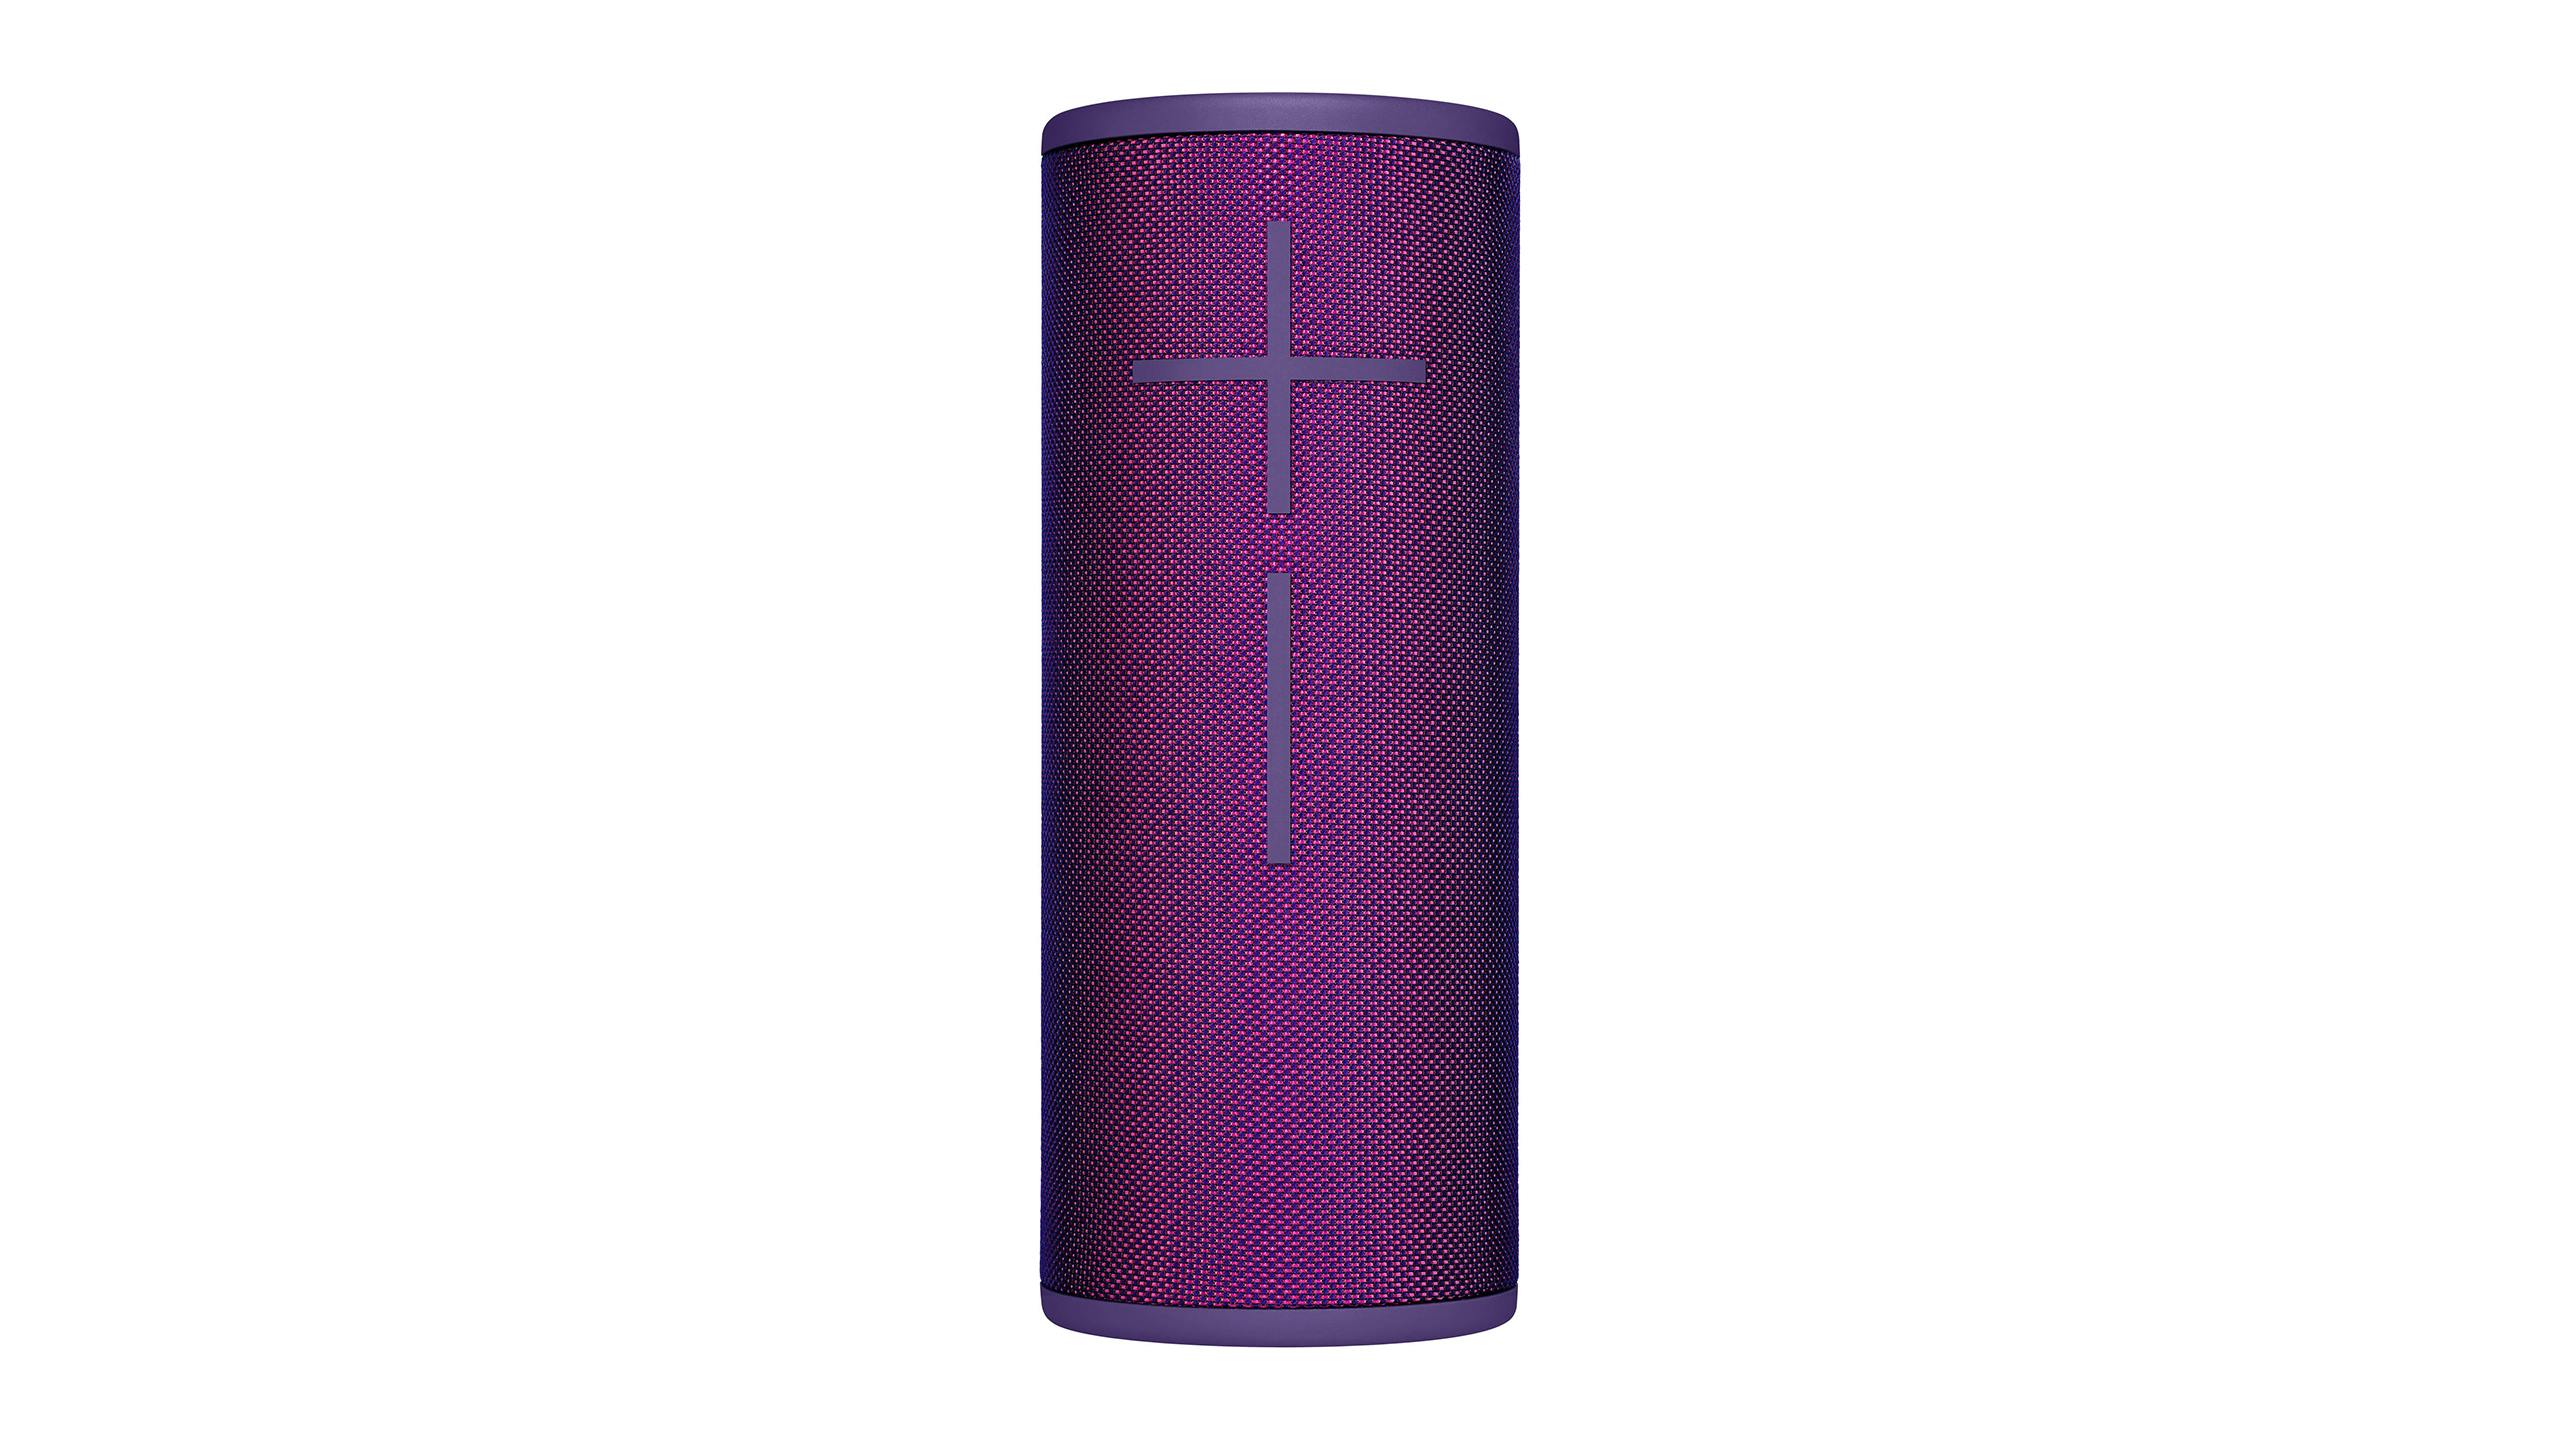 Ultimate Ears MEGABOOM 3 Portable Bluetooth Speaker - Ultraviolet Purple